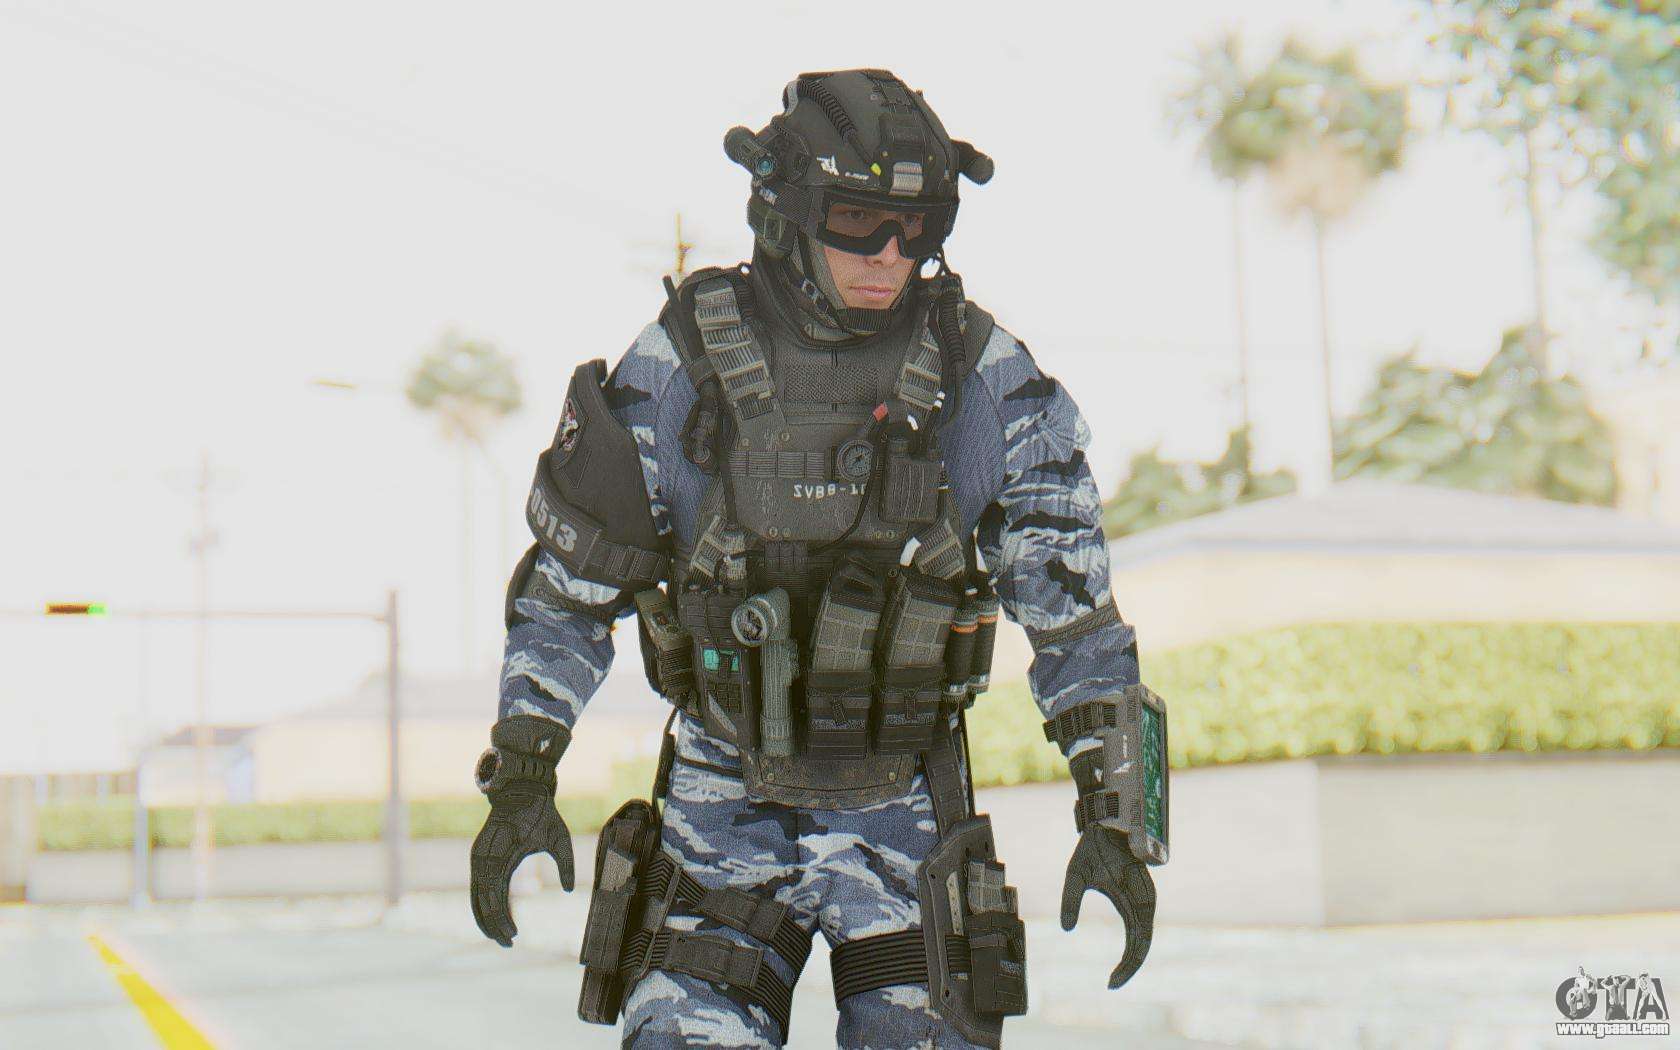 Federation Elite Assault Urban-Navy for GTA San Andreas